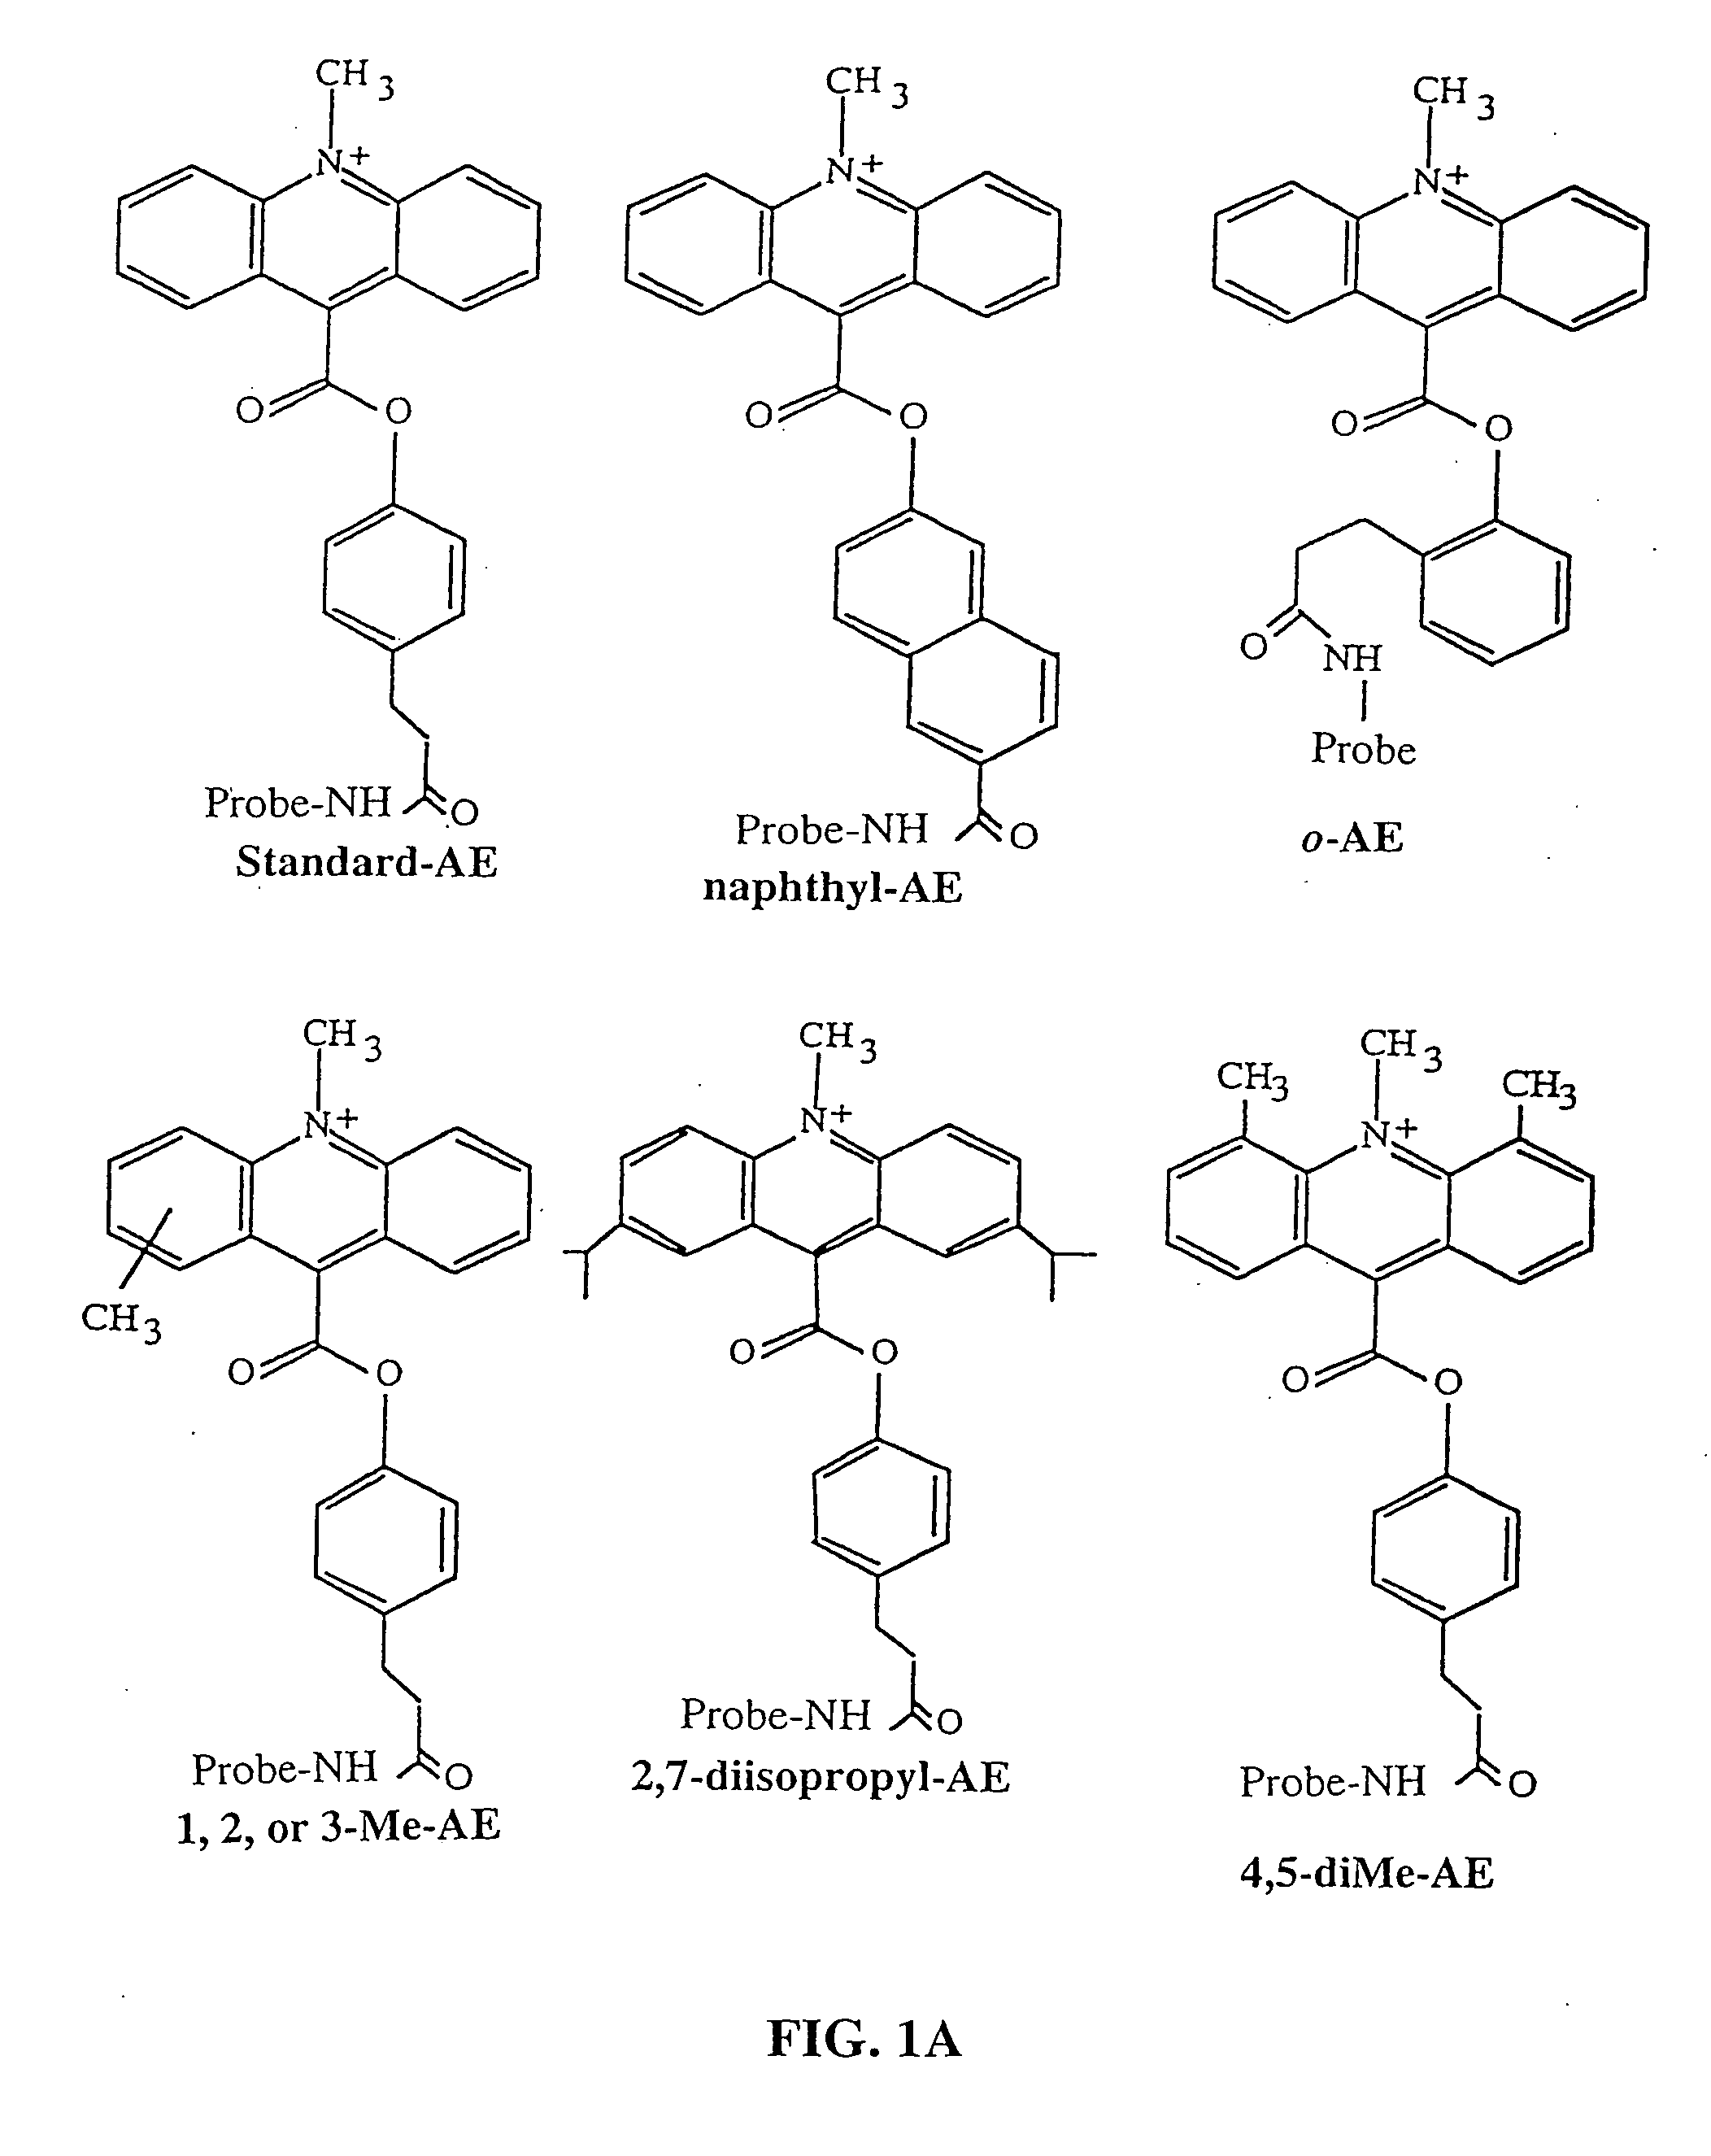 Kits containing modified amplification oligonucleotides